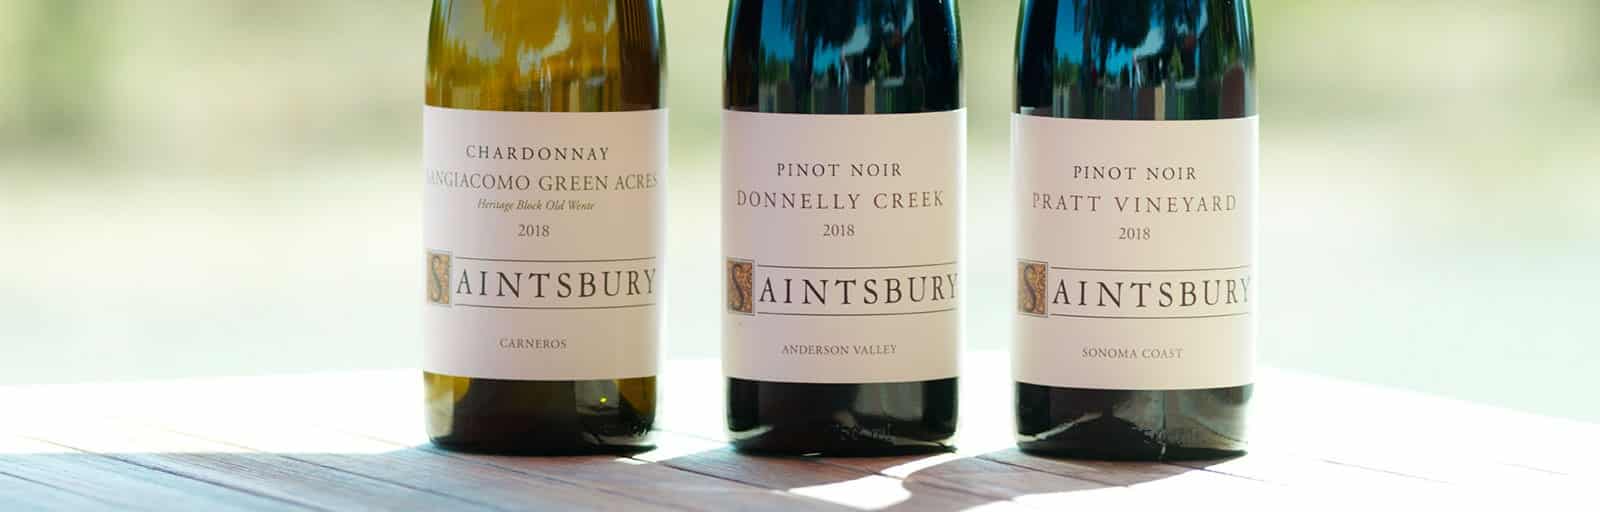 Saintsbury Winery